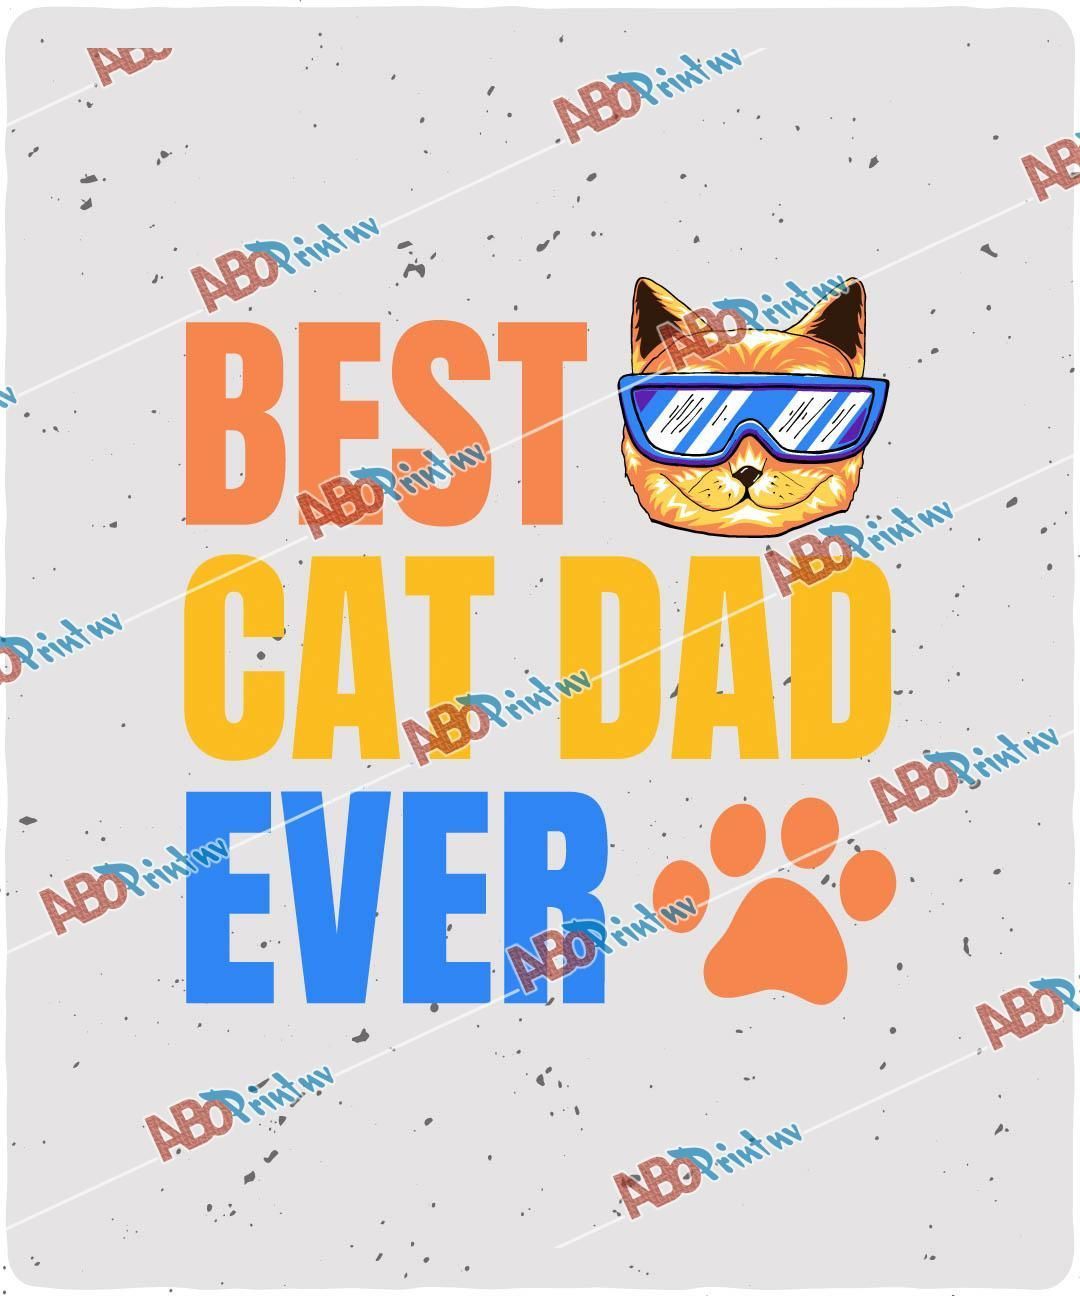 Best Cat Dad Ever.jpg